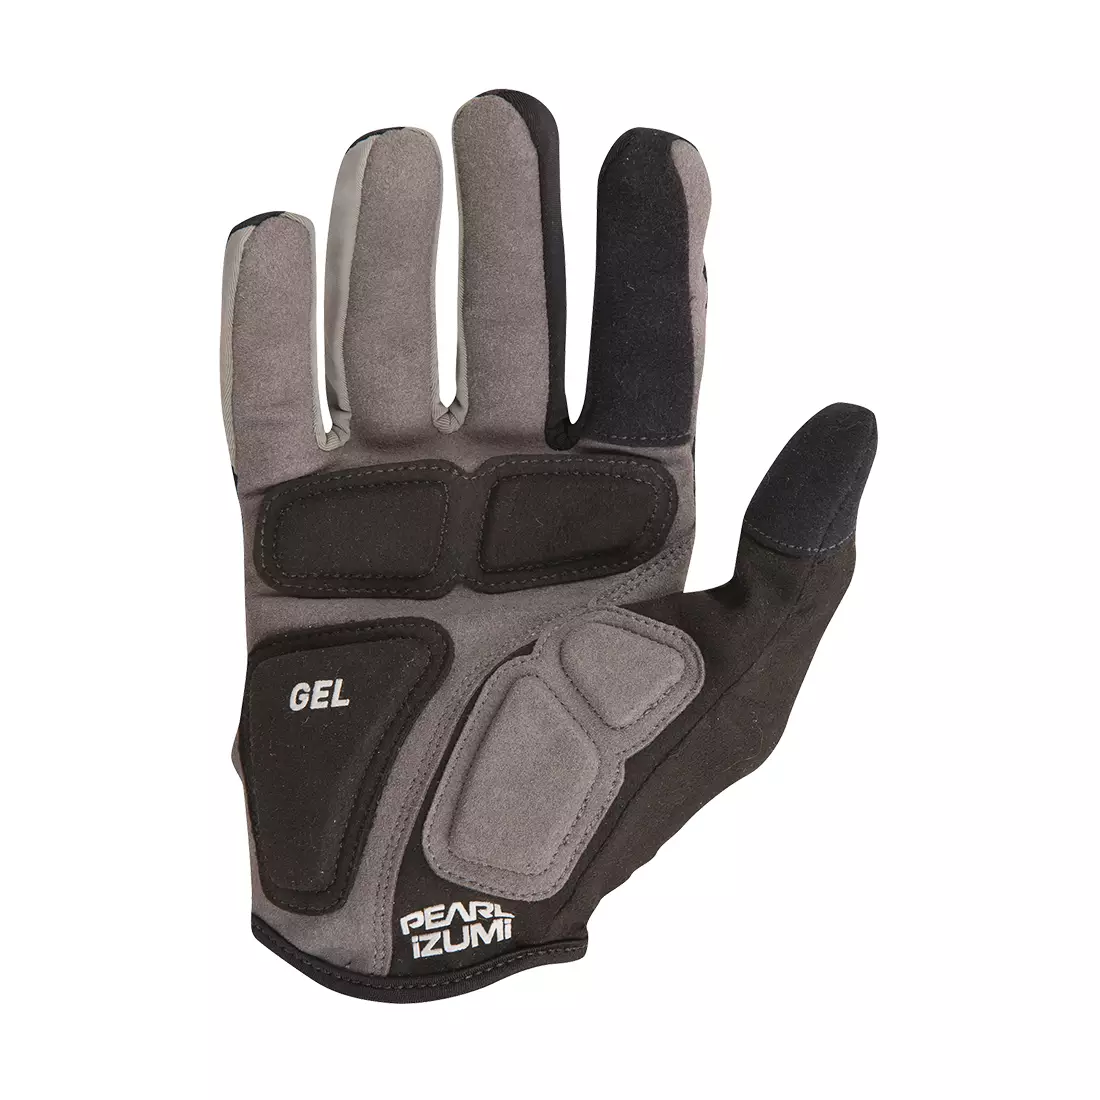 PEARL IZUMI ELITE GEL men's cycling gloves long fingers black 14141603